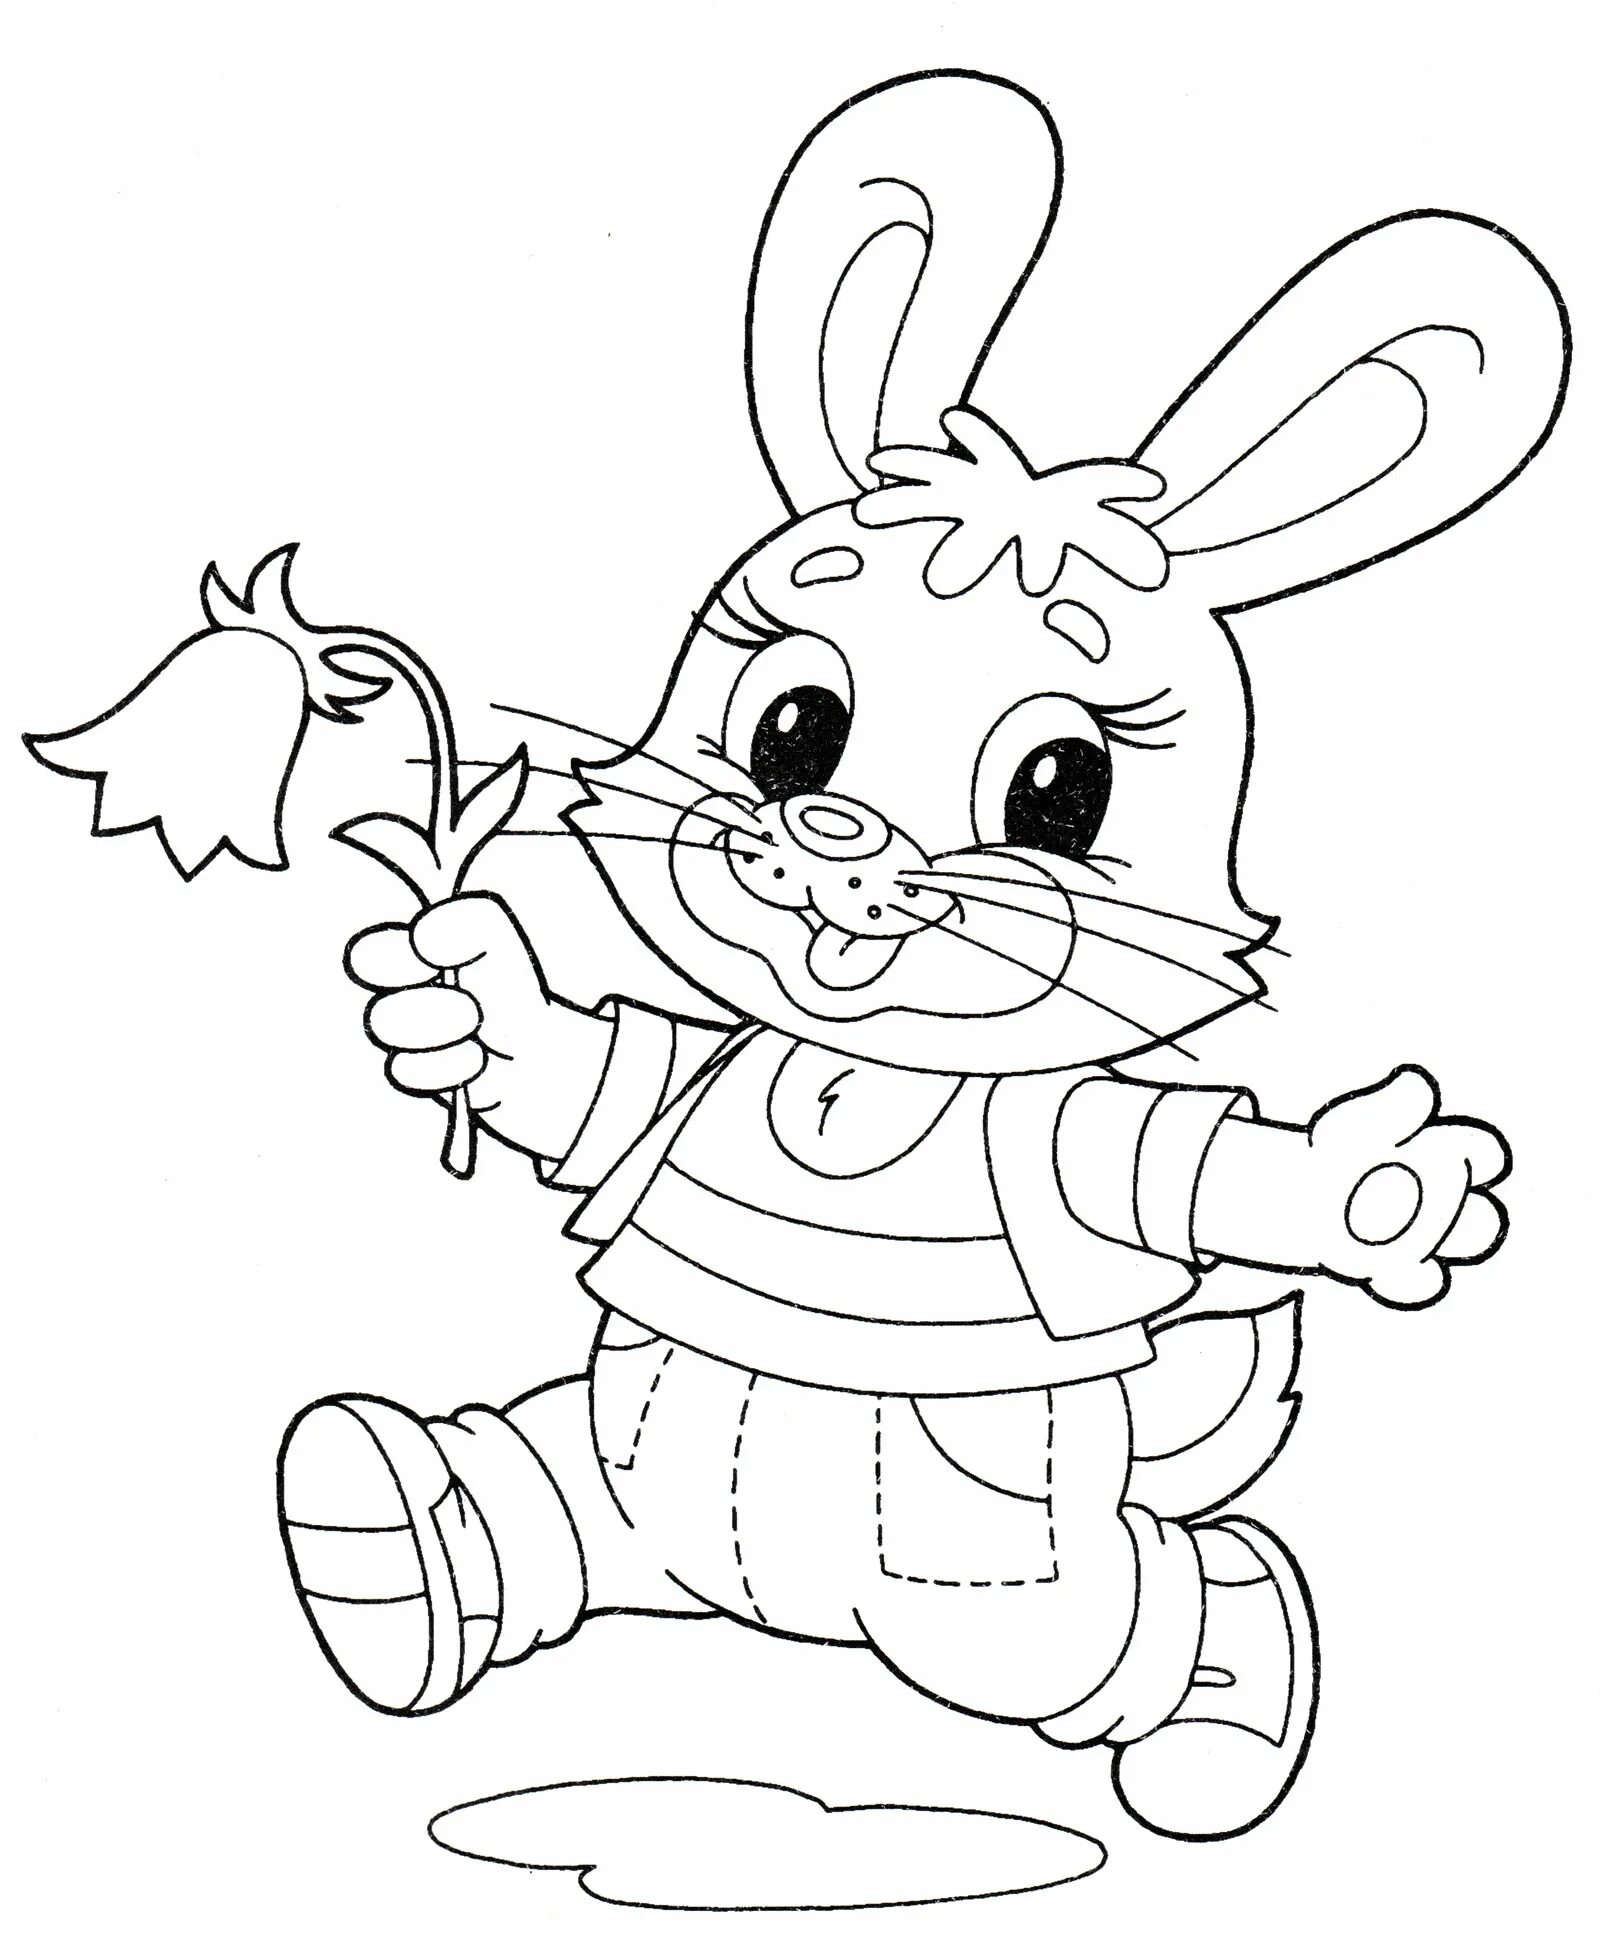 Bunny jumper #2